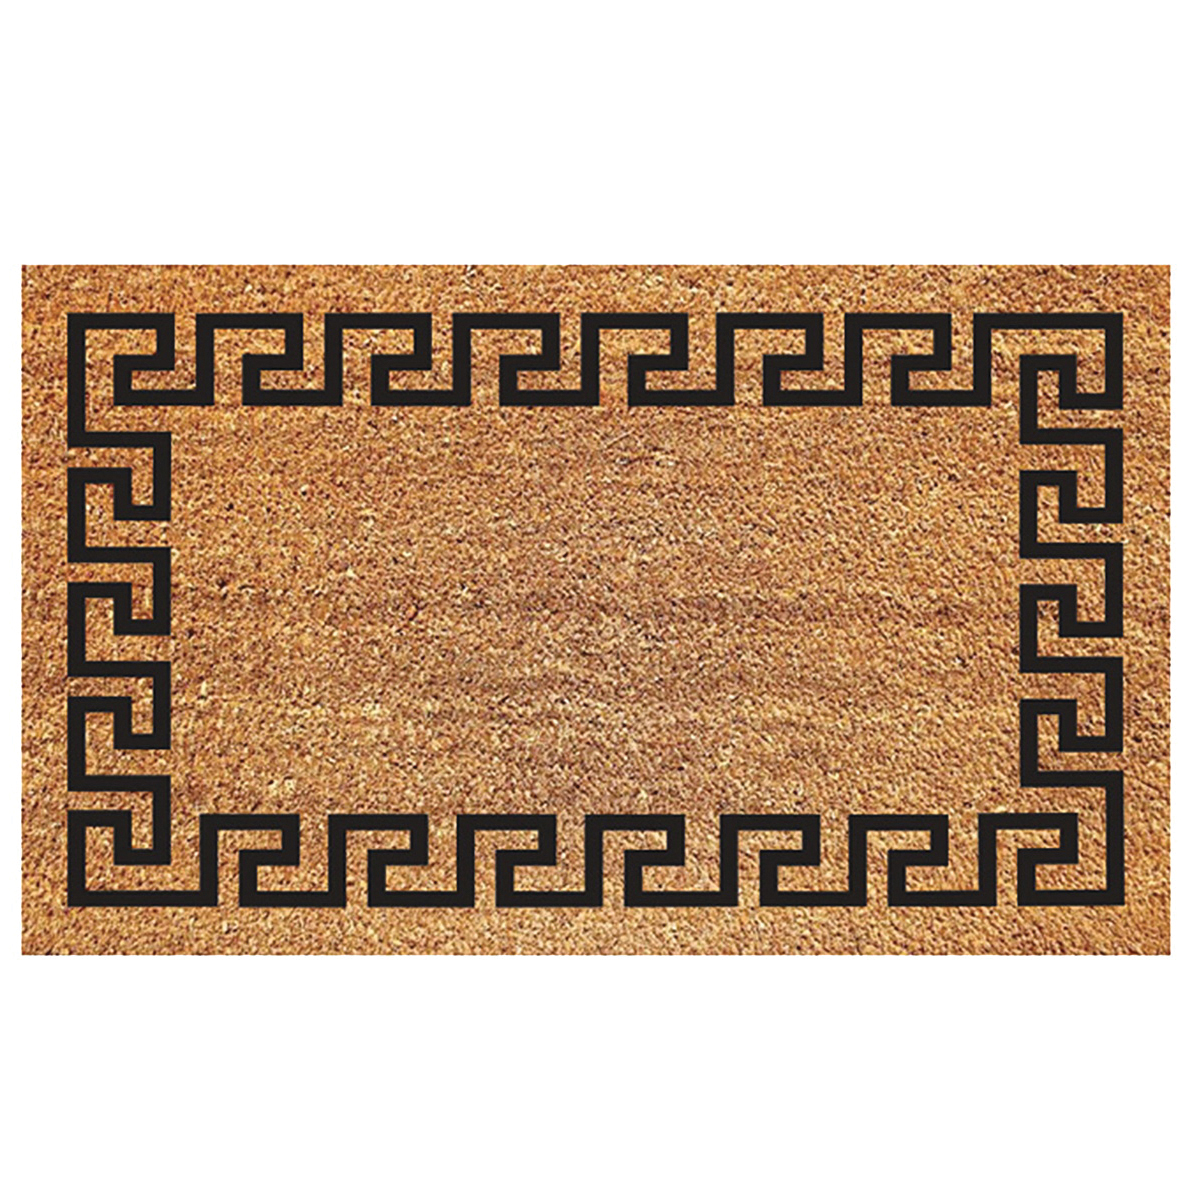 77FLGKY830 Non-Slip Door Mat, 18 in L, 30 in W, Rectangular, Greek Key Pattern, Black/Tan